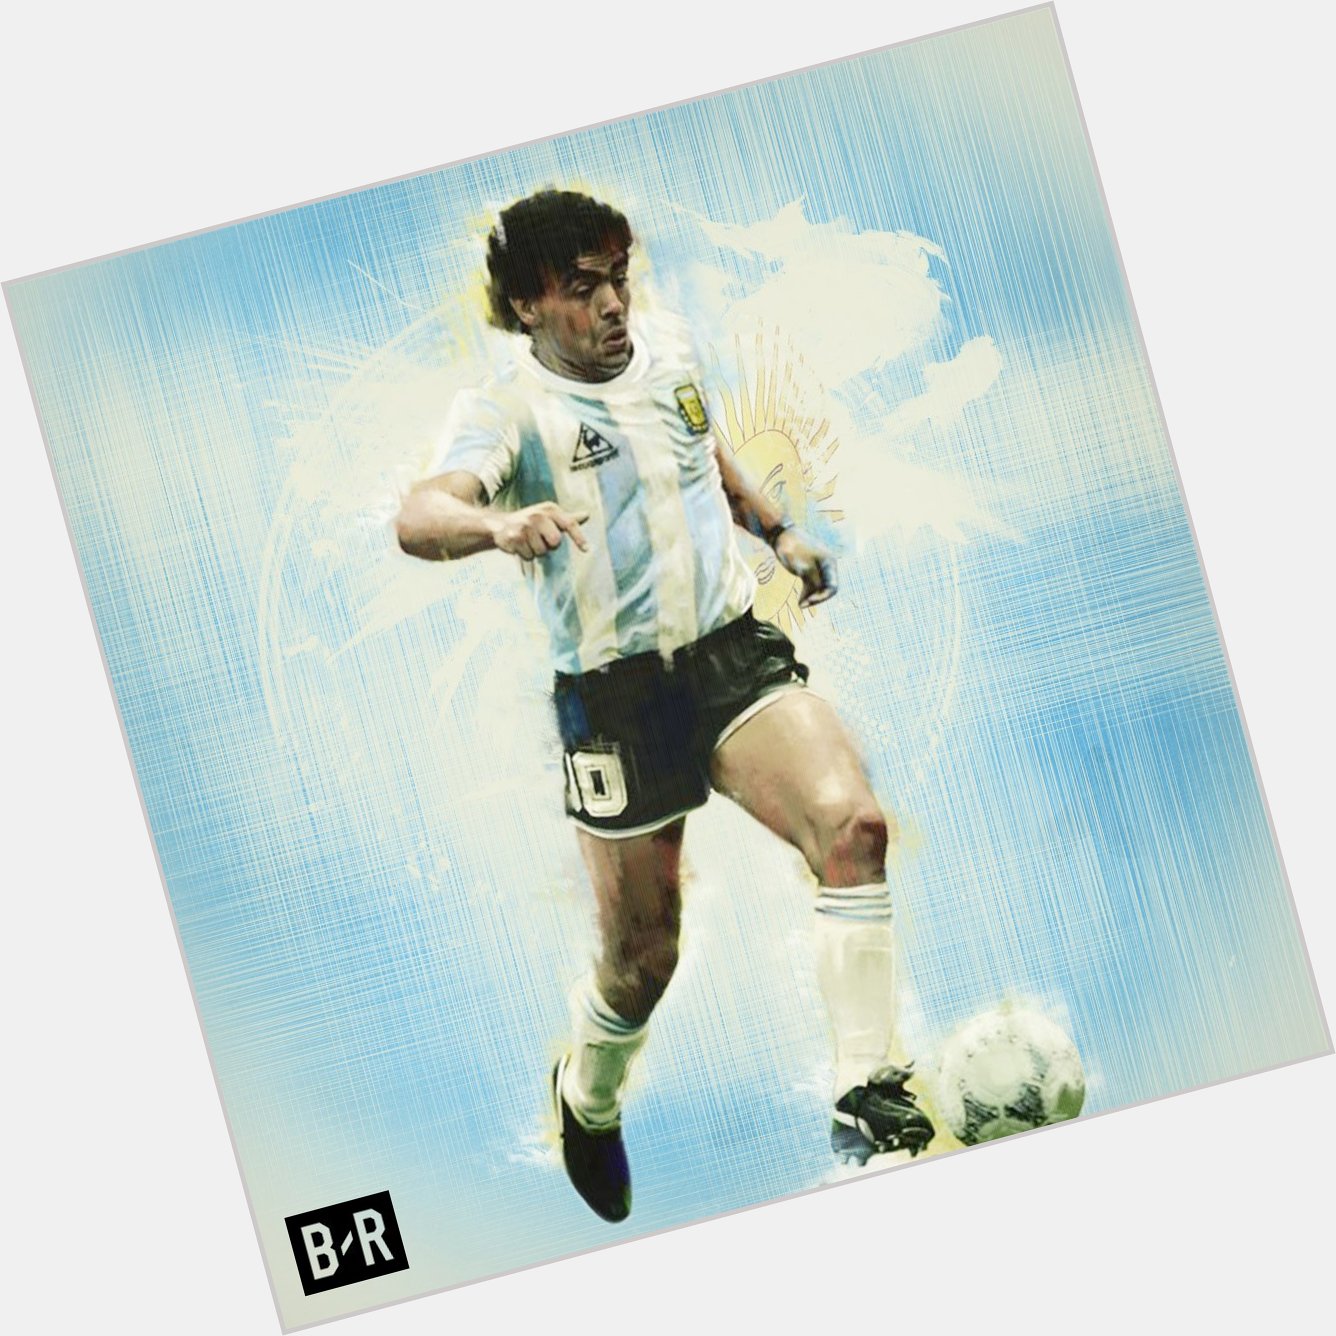 Happy 57th birthday Diego Maradona an undisputed legend of the game 